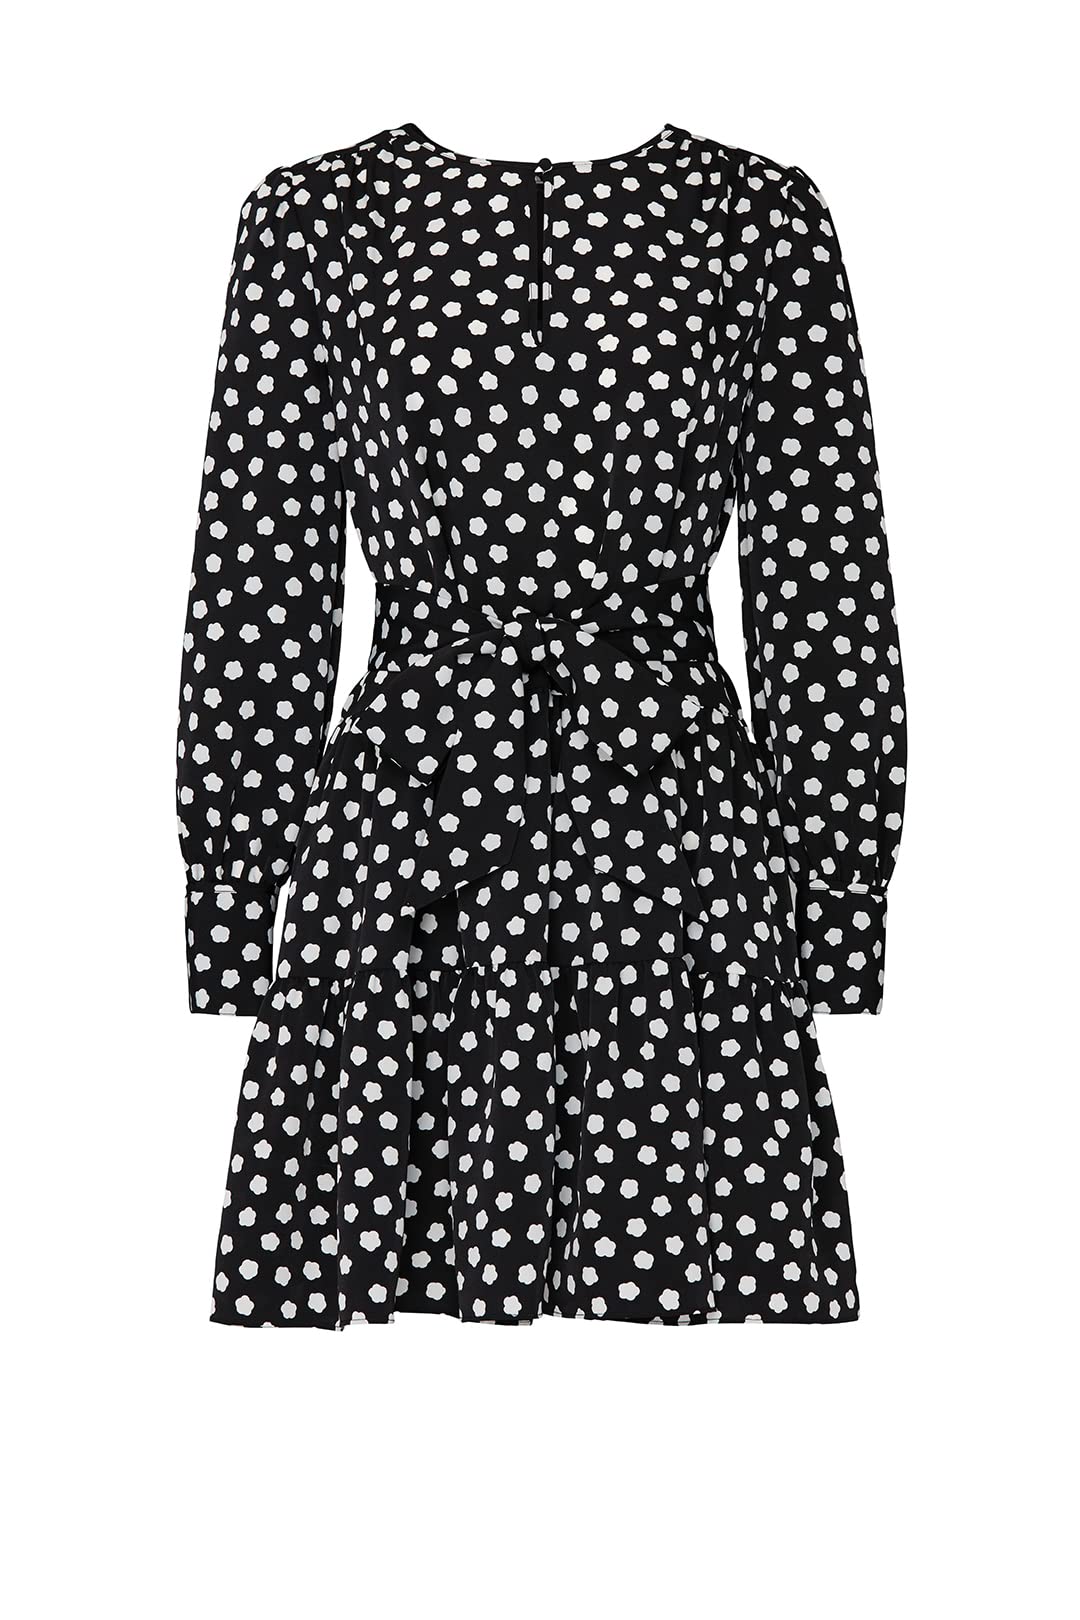 Kate Spade New York Rent The Runway Pre-Loved Cloud Dot Dress